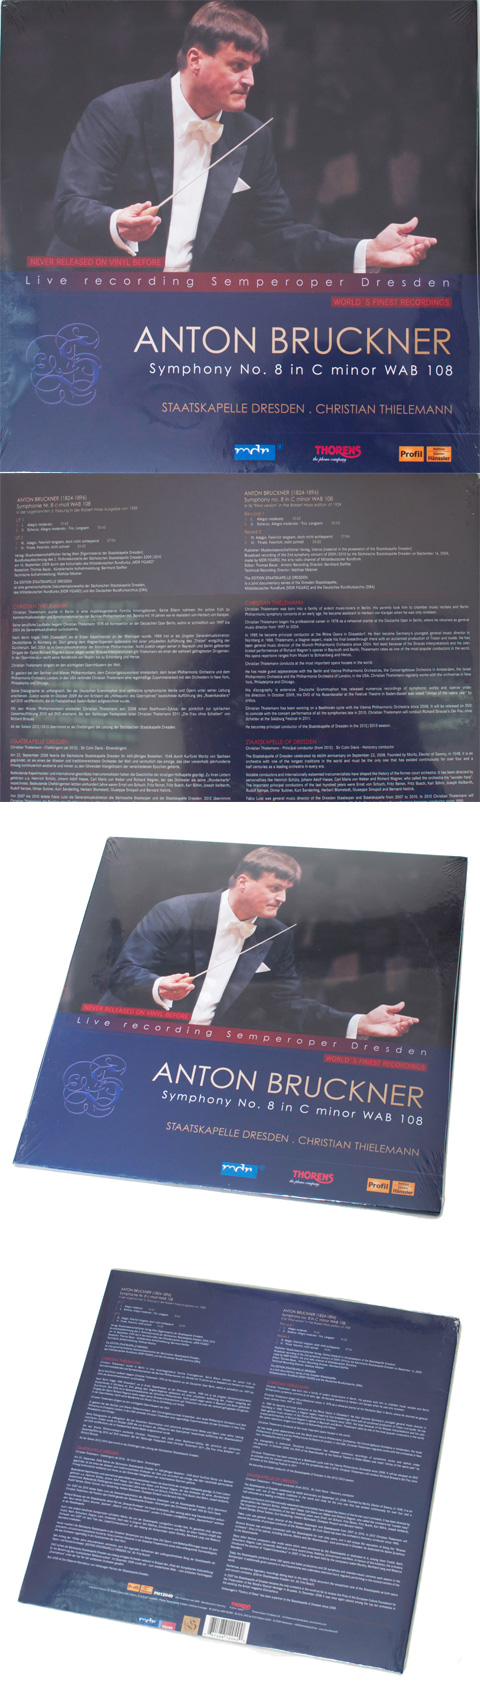 ANTON BRUCKNER  SYMPHONY No. 8 In C Minor Wab 108. 2 LP Set 2010 (PH12040) PROFIL/GER. MINT